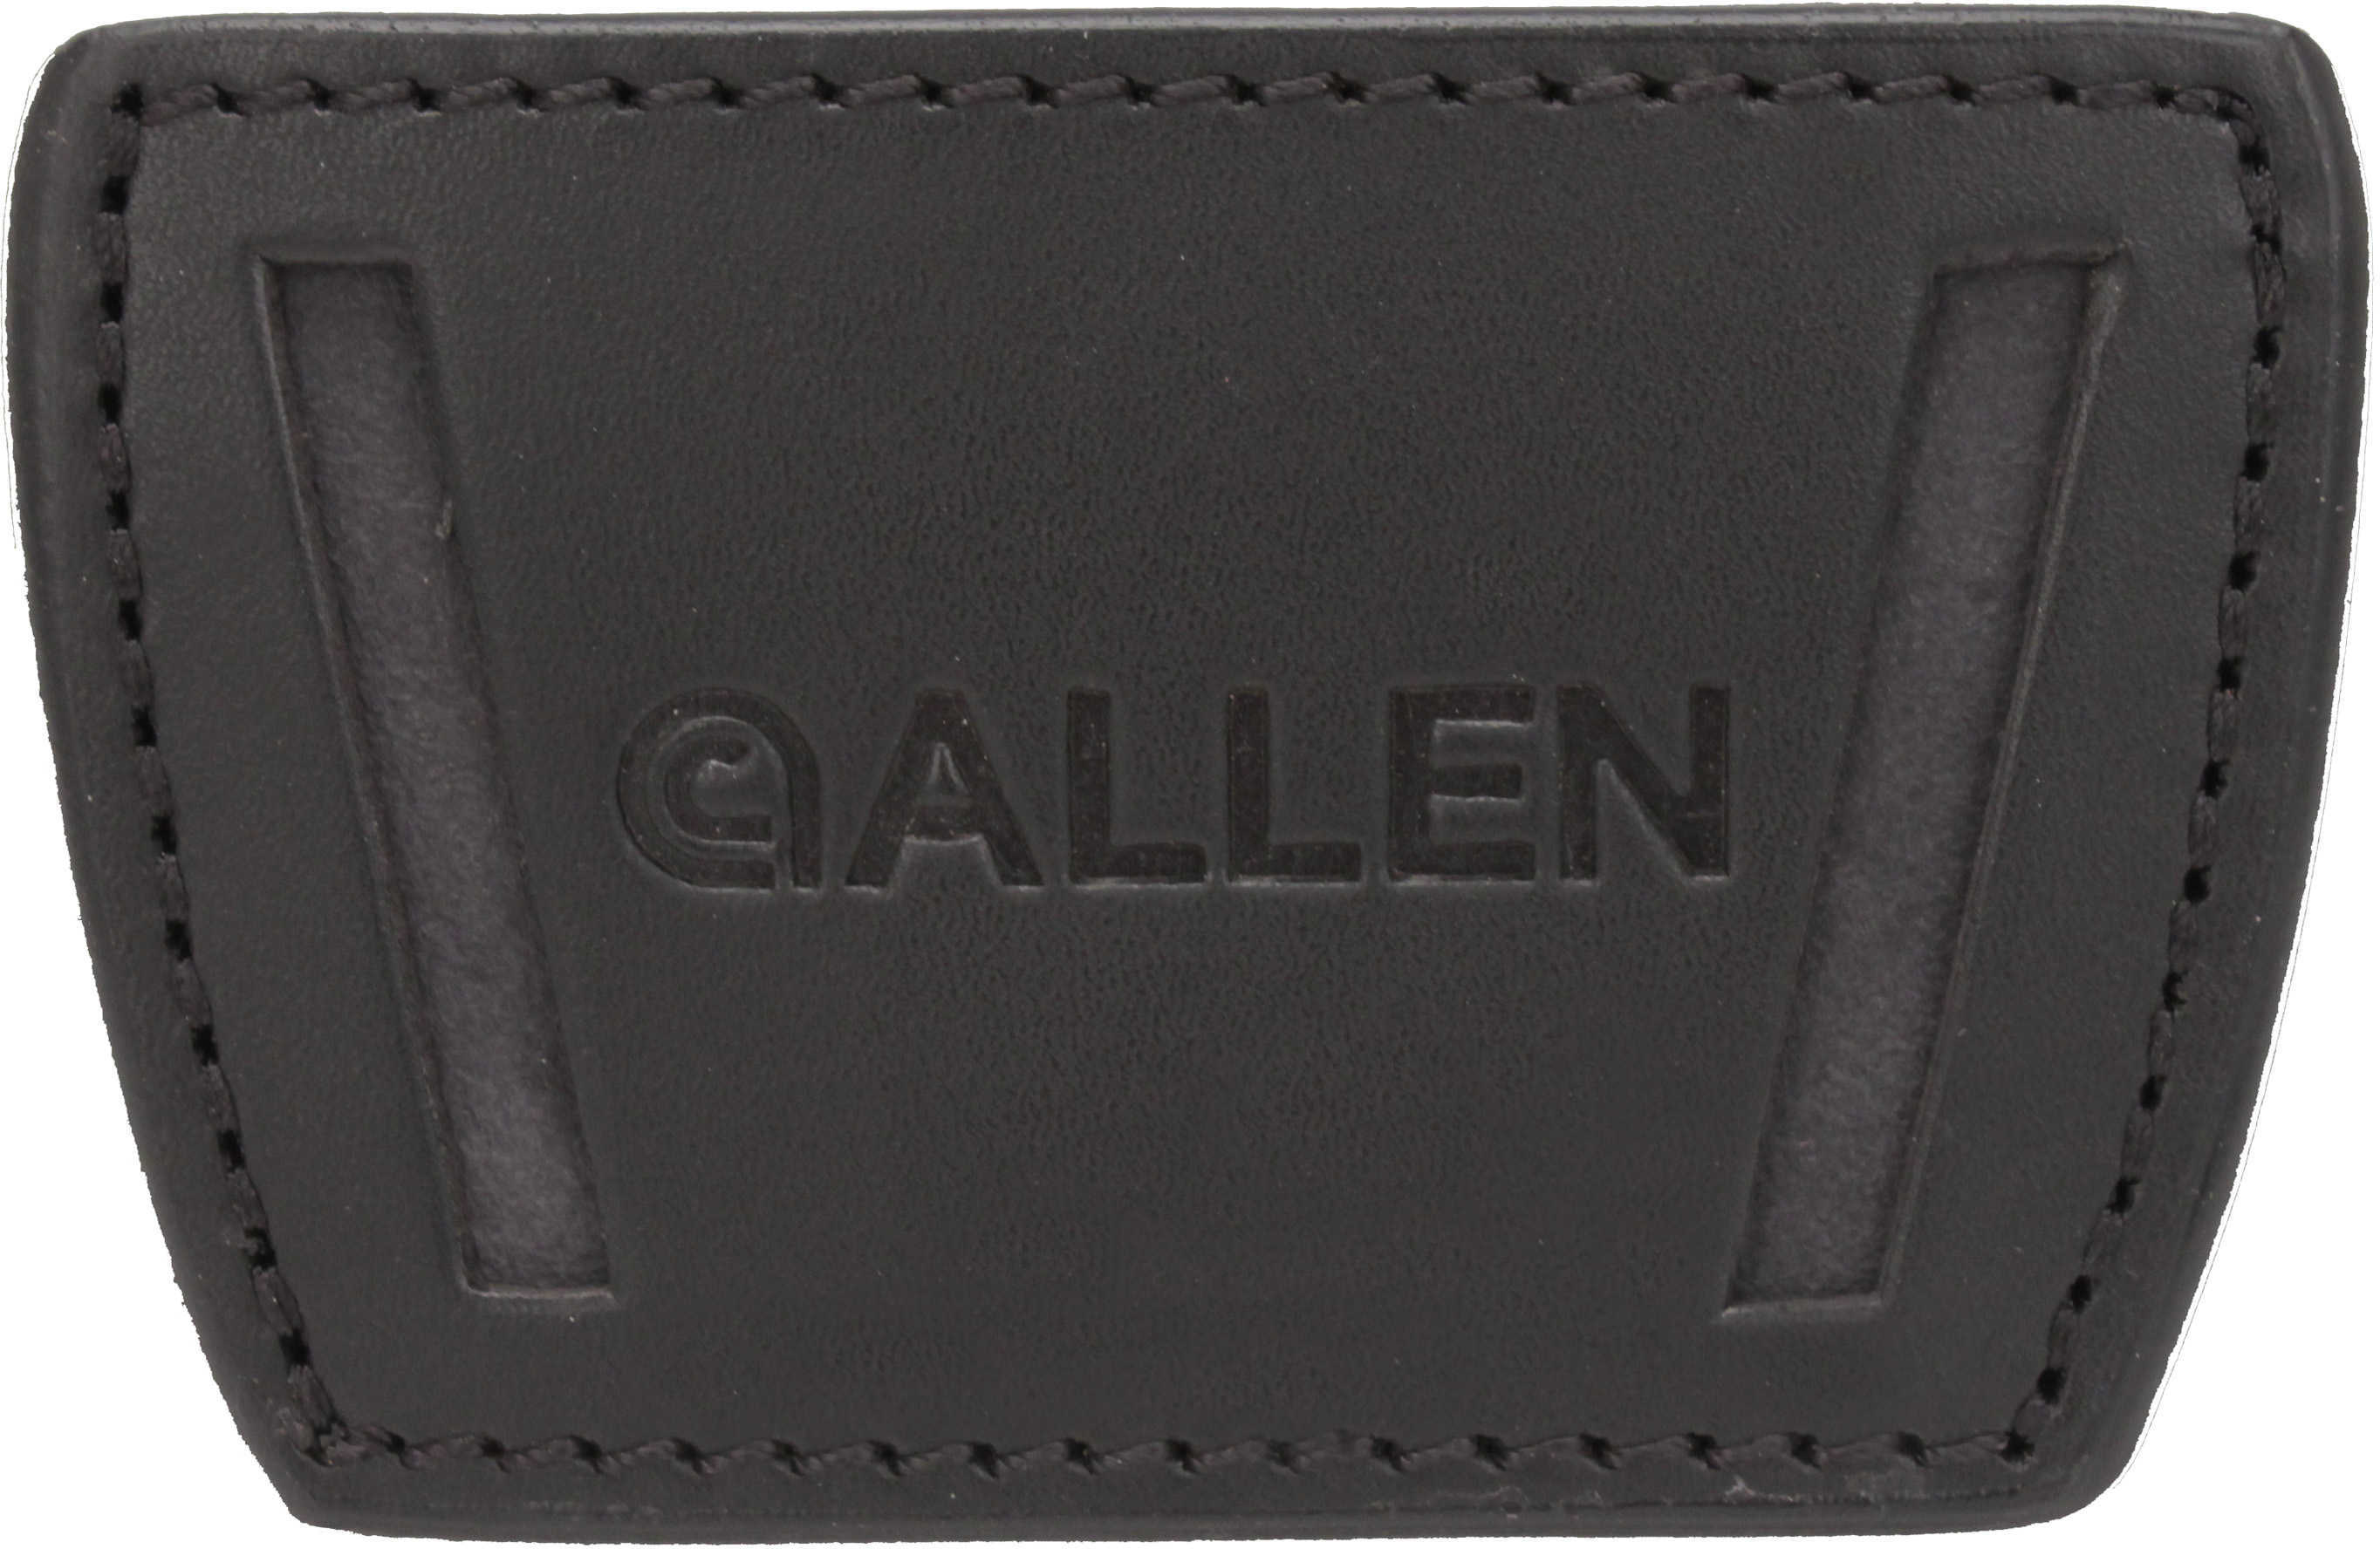 Allen Cases Glenwood Belt Slide Leather Holster Small, Black 44830